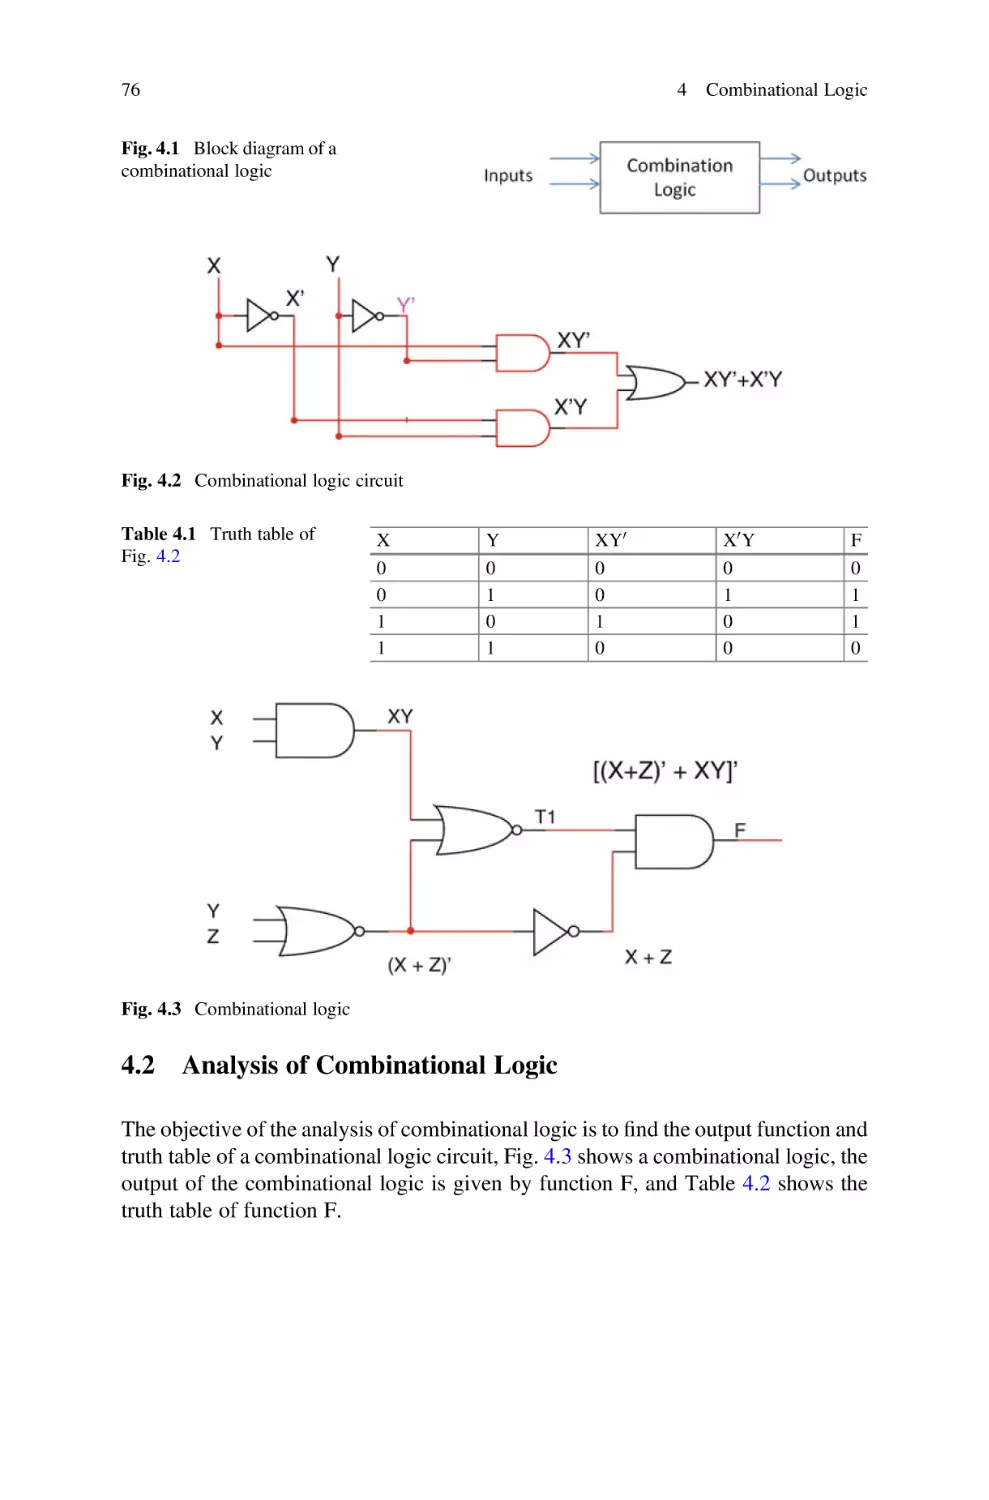 4.2 Analysis of Combinational Logic